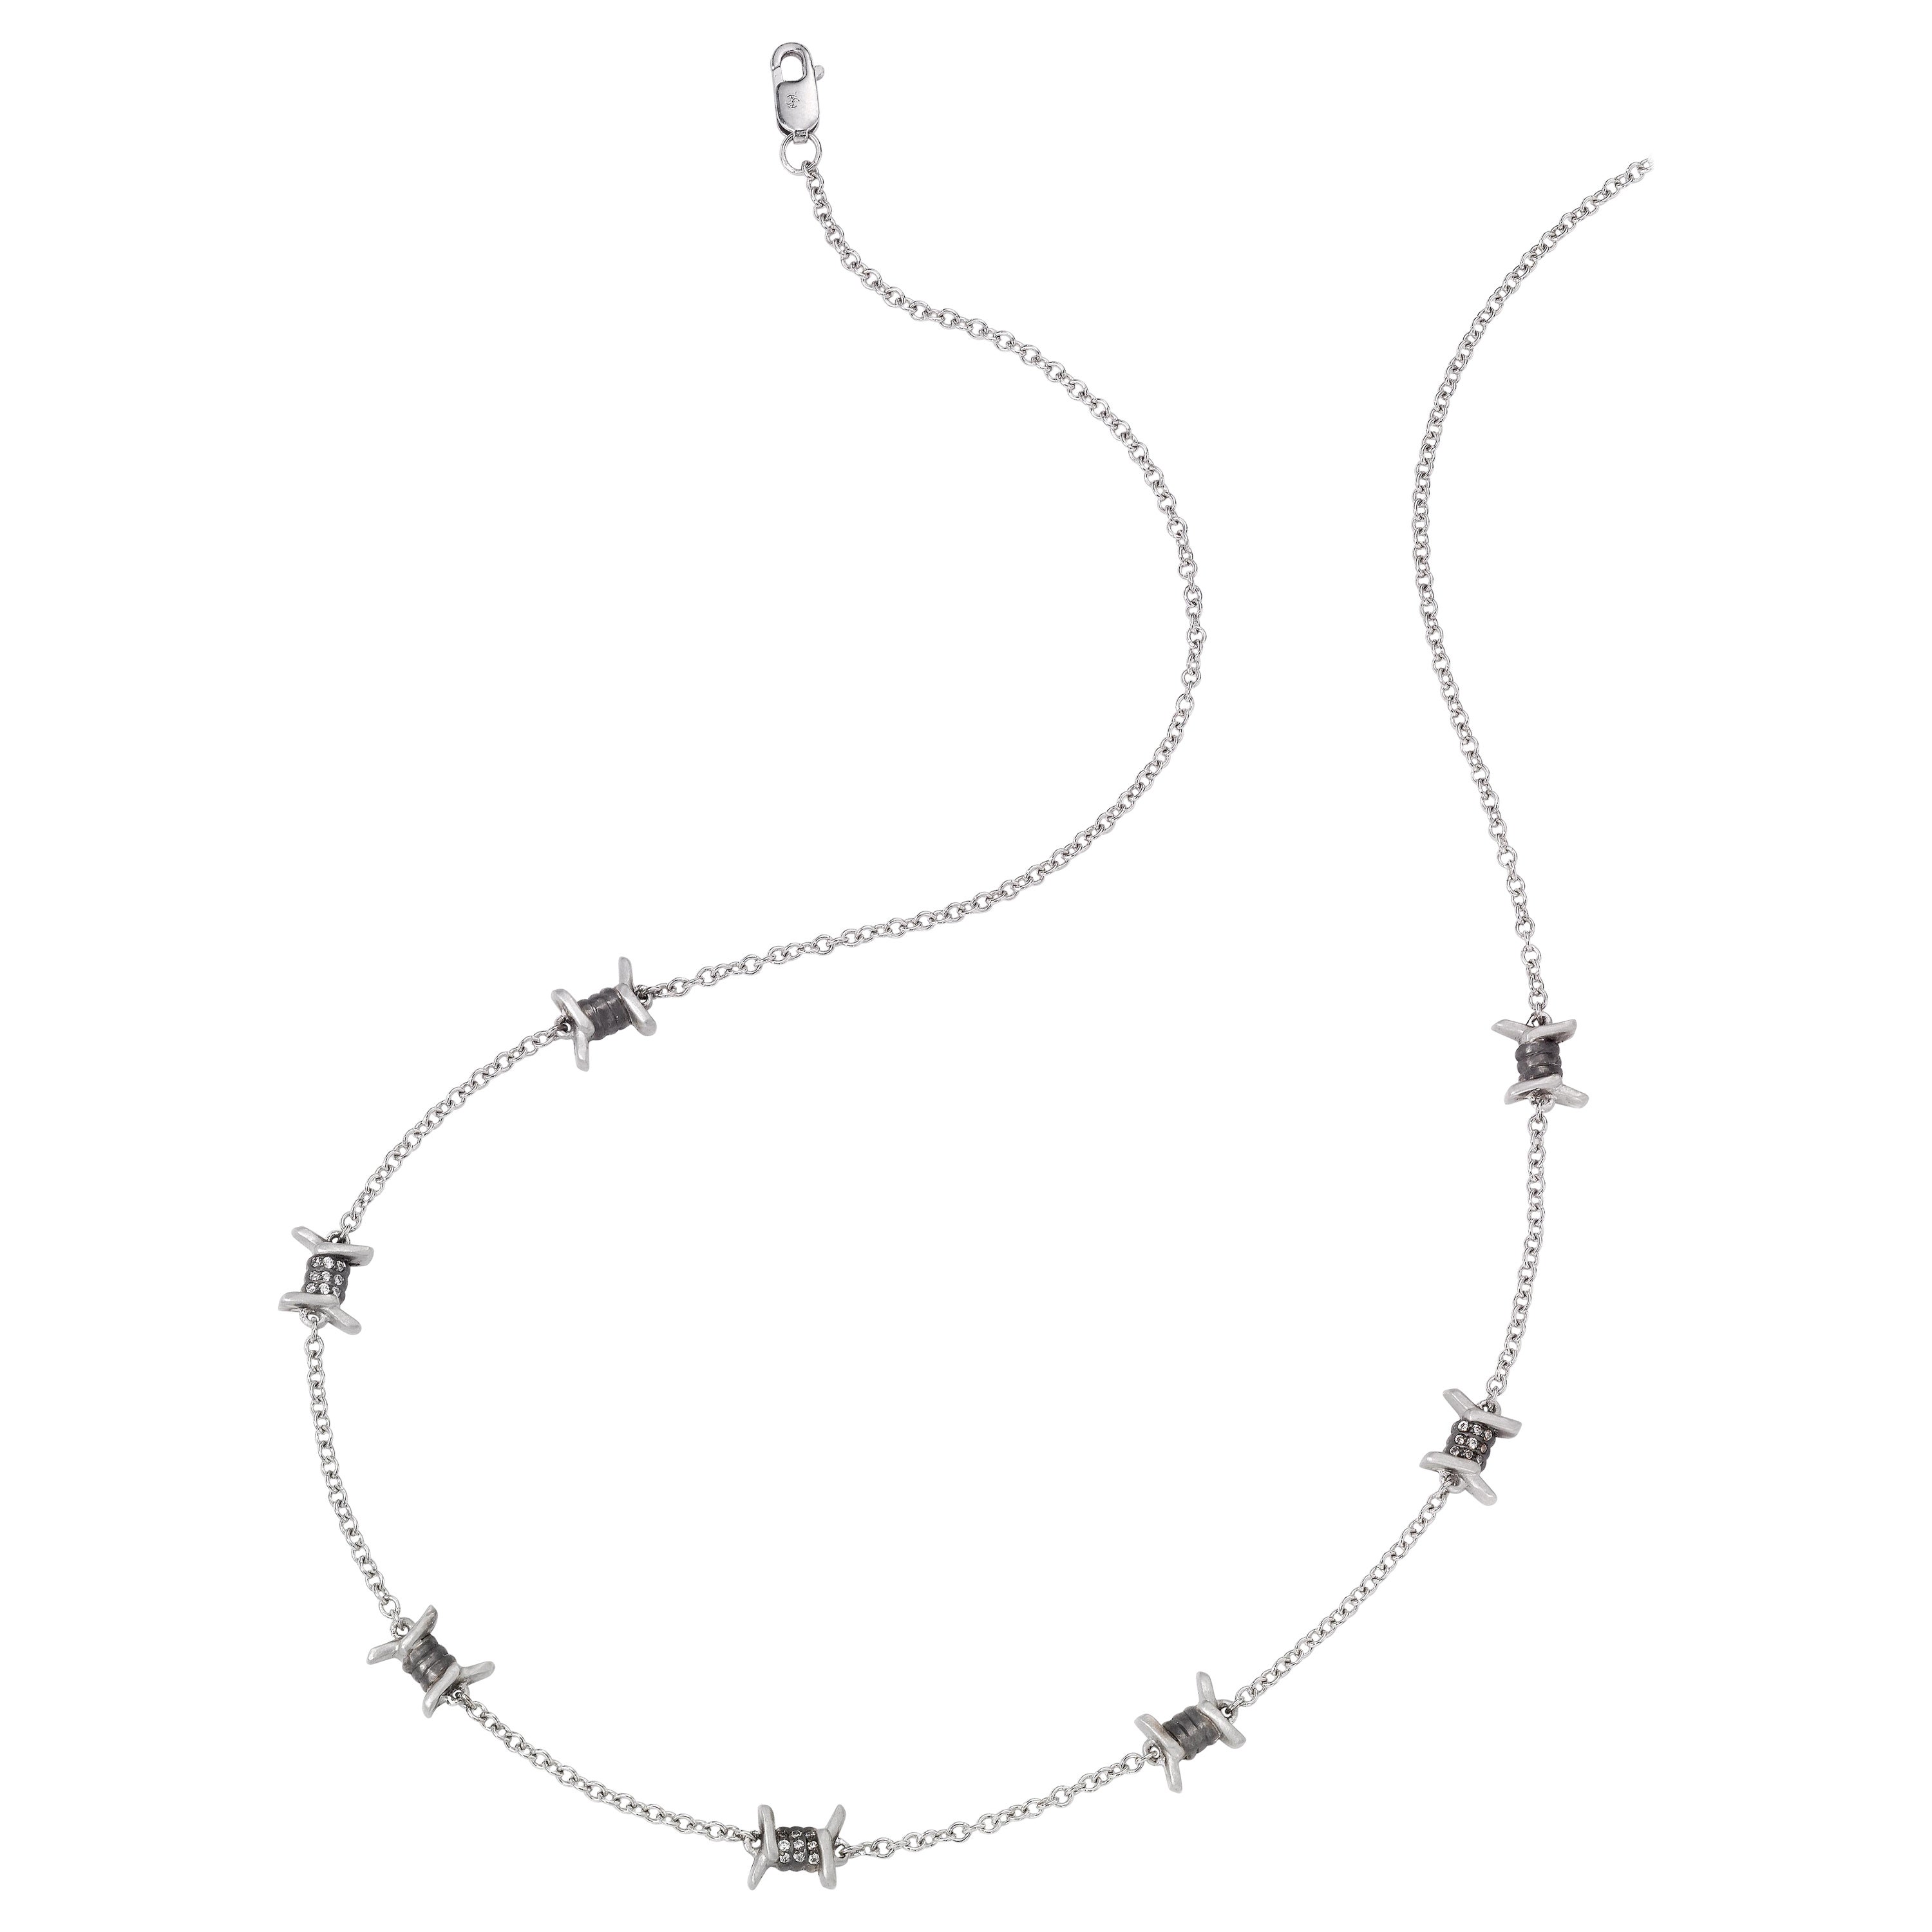 Wendy Brandes Chain Necklaces